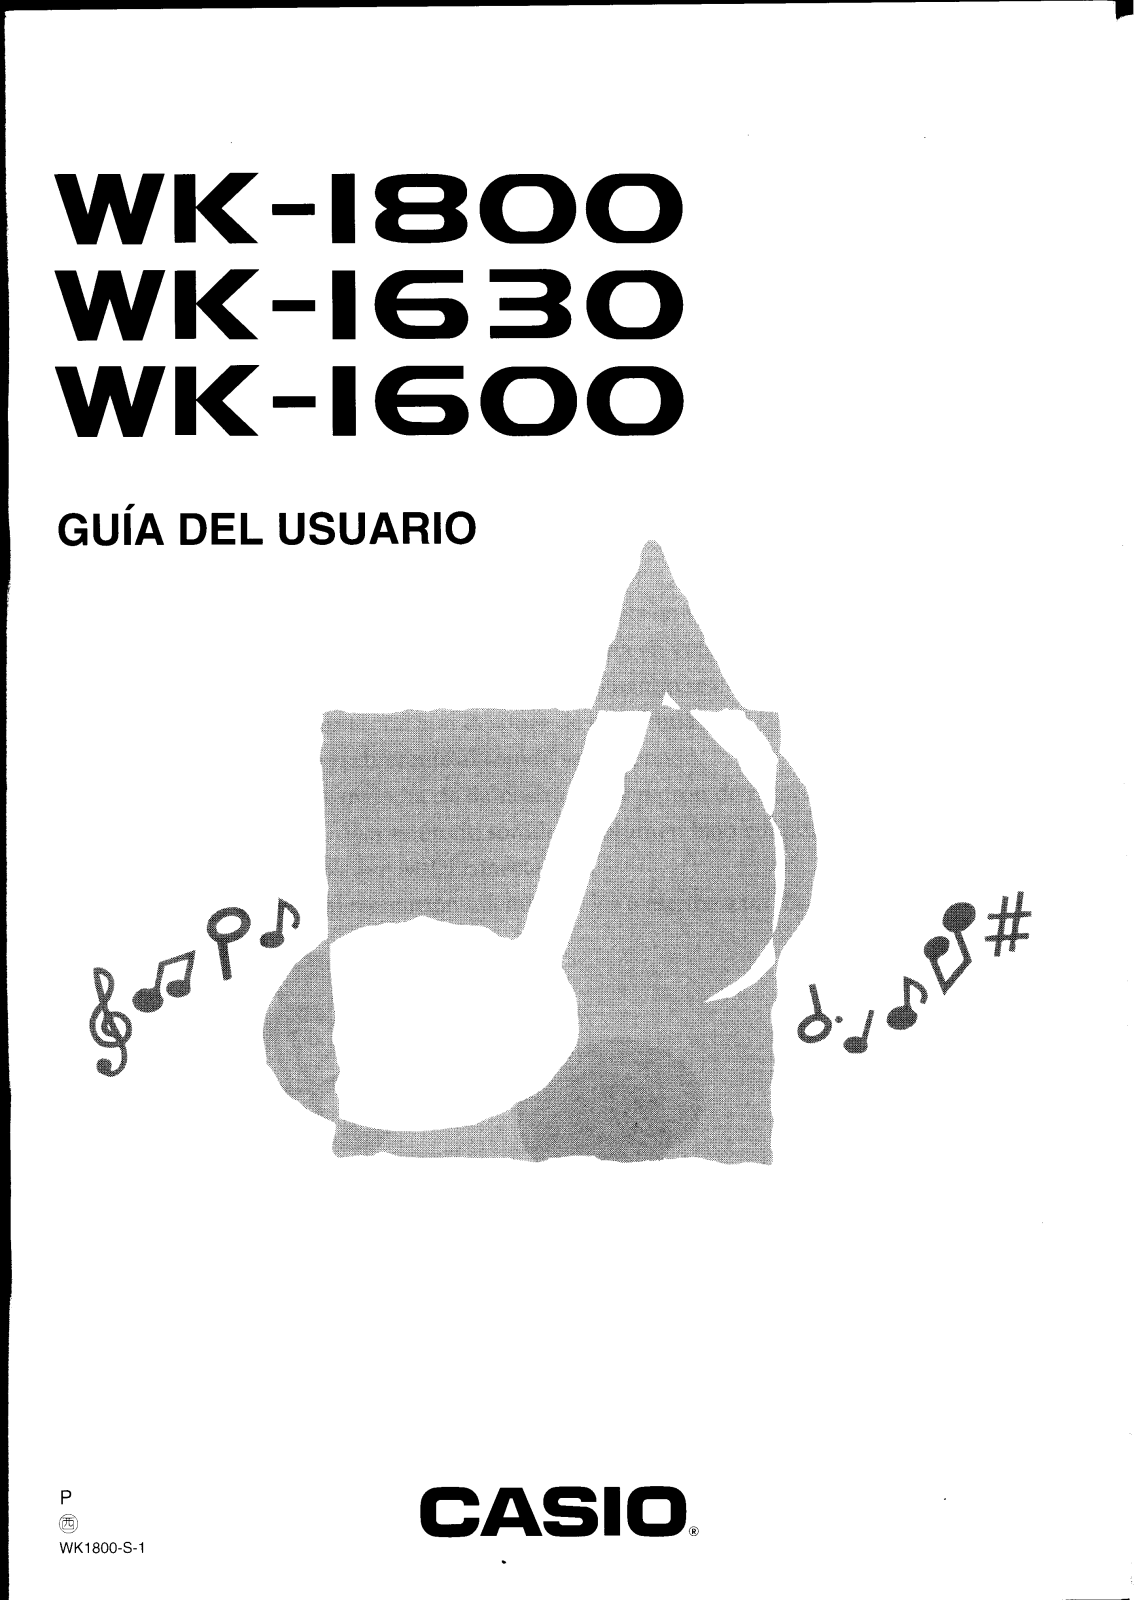 Casio WK-1600, WK-1800, WK-1630 User Manual